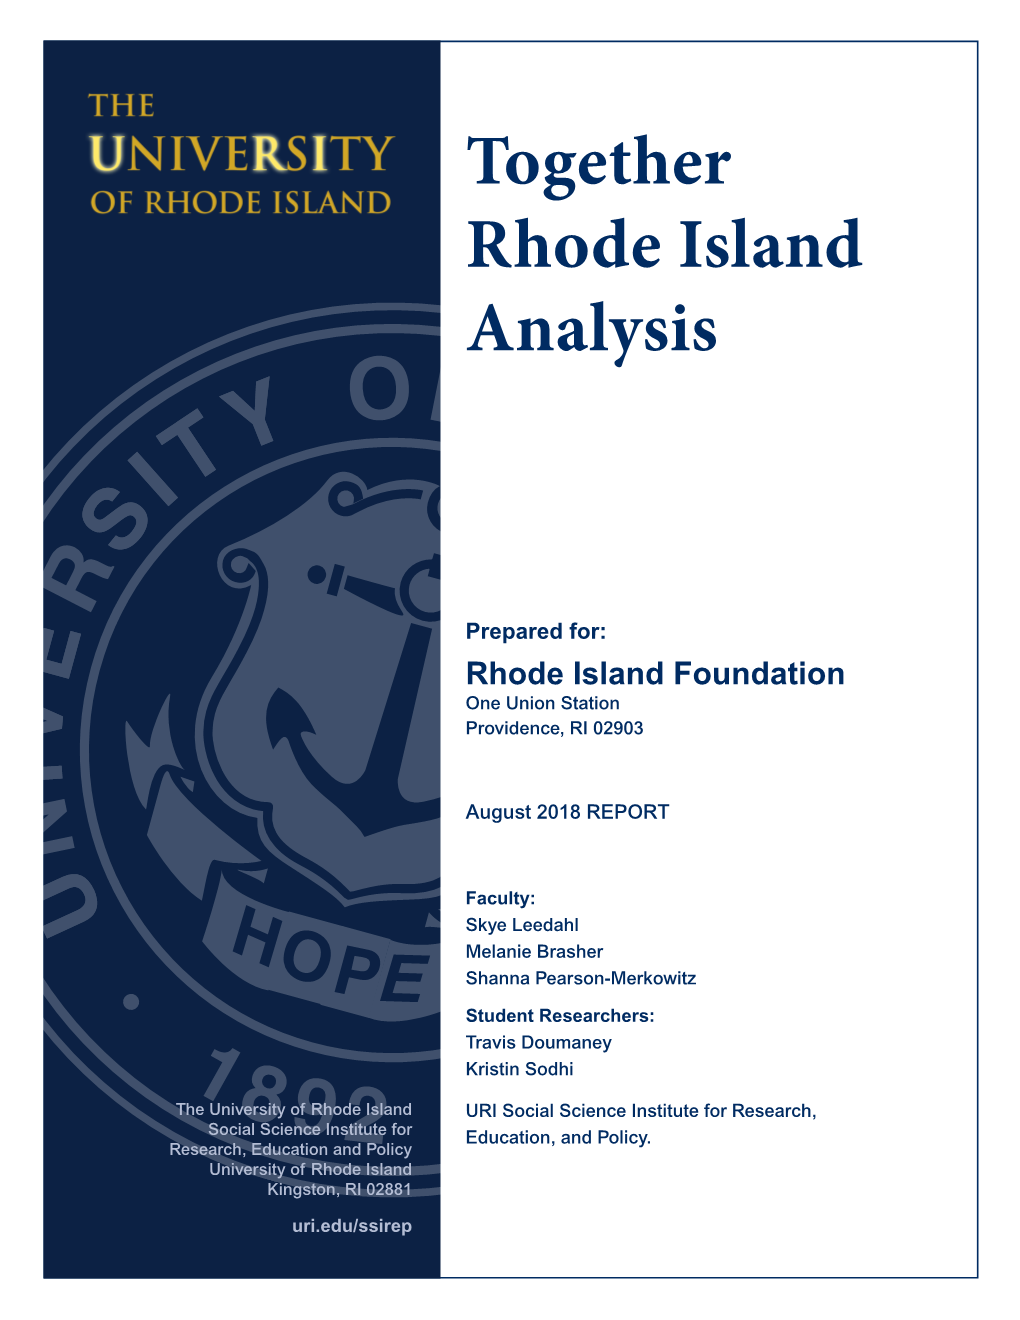 Together Rhode Island Analysis